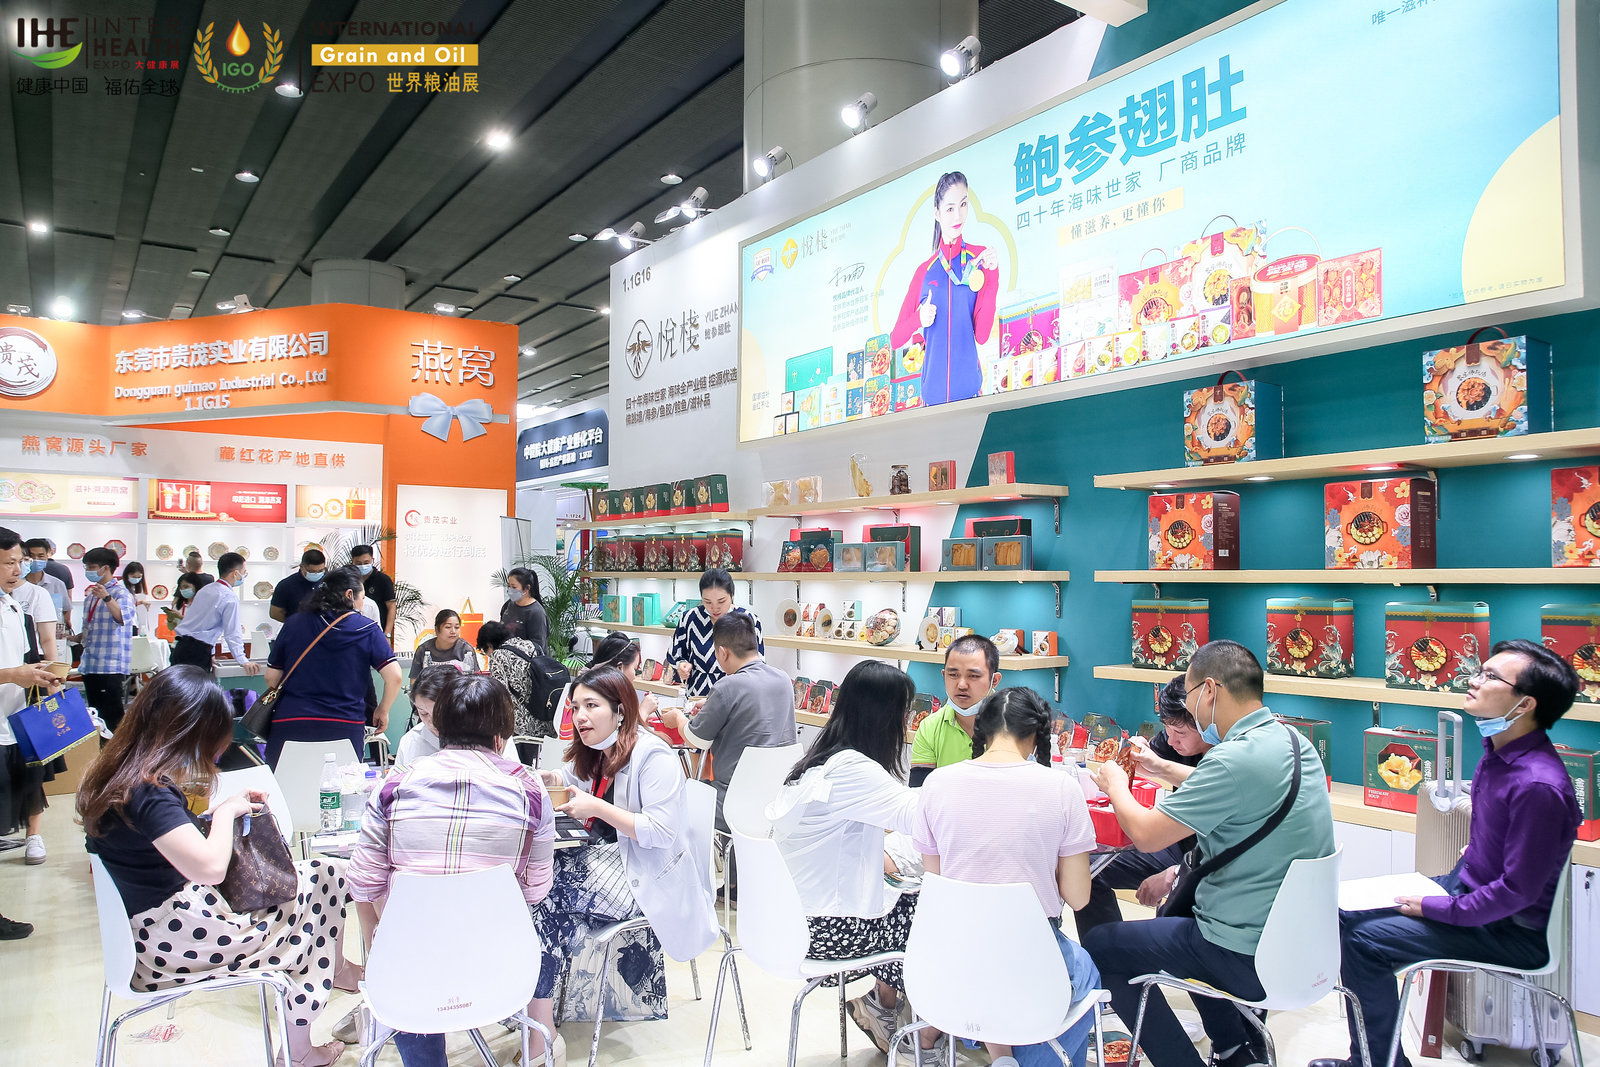 2022中国健康食品展览会(www.828i.com)